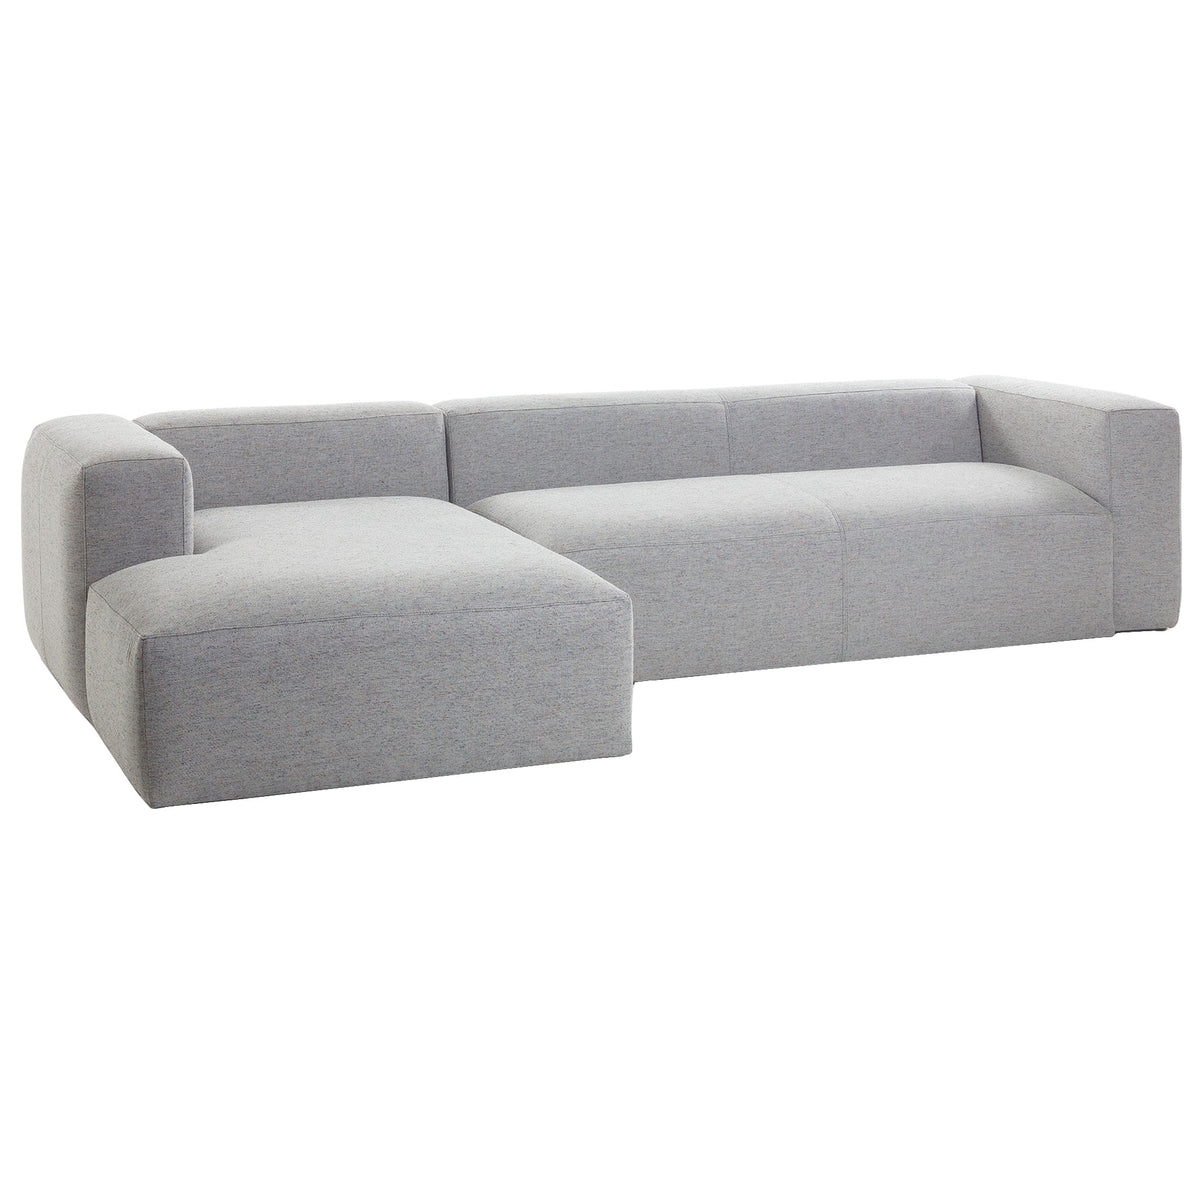 Gian Italian Design / 3S. Straight Arm L-Shape Sofa - Walls Nation